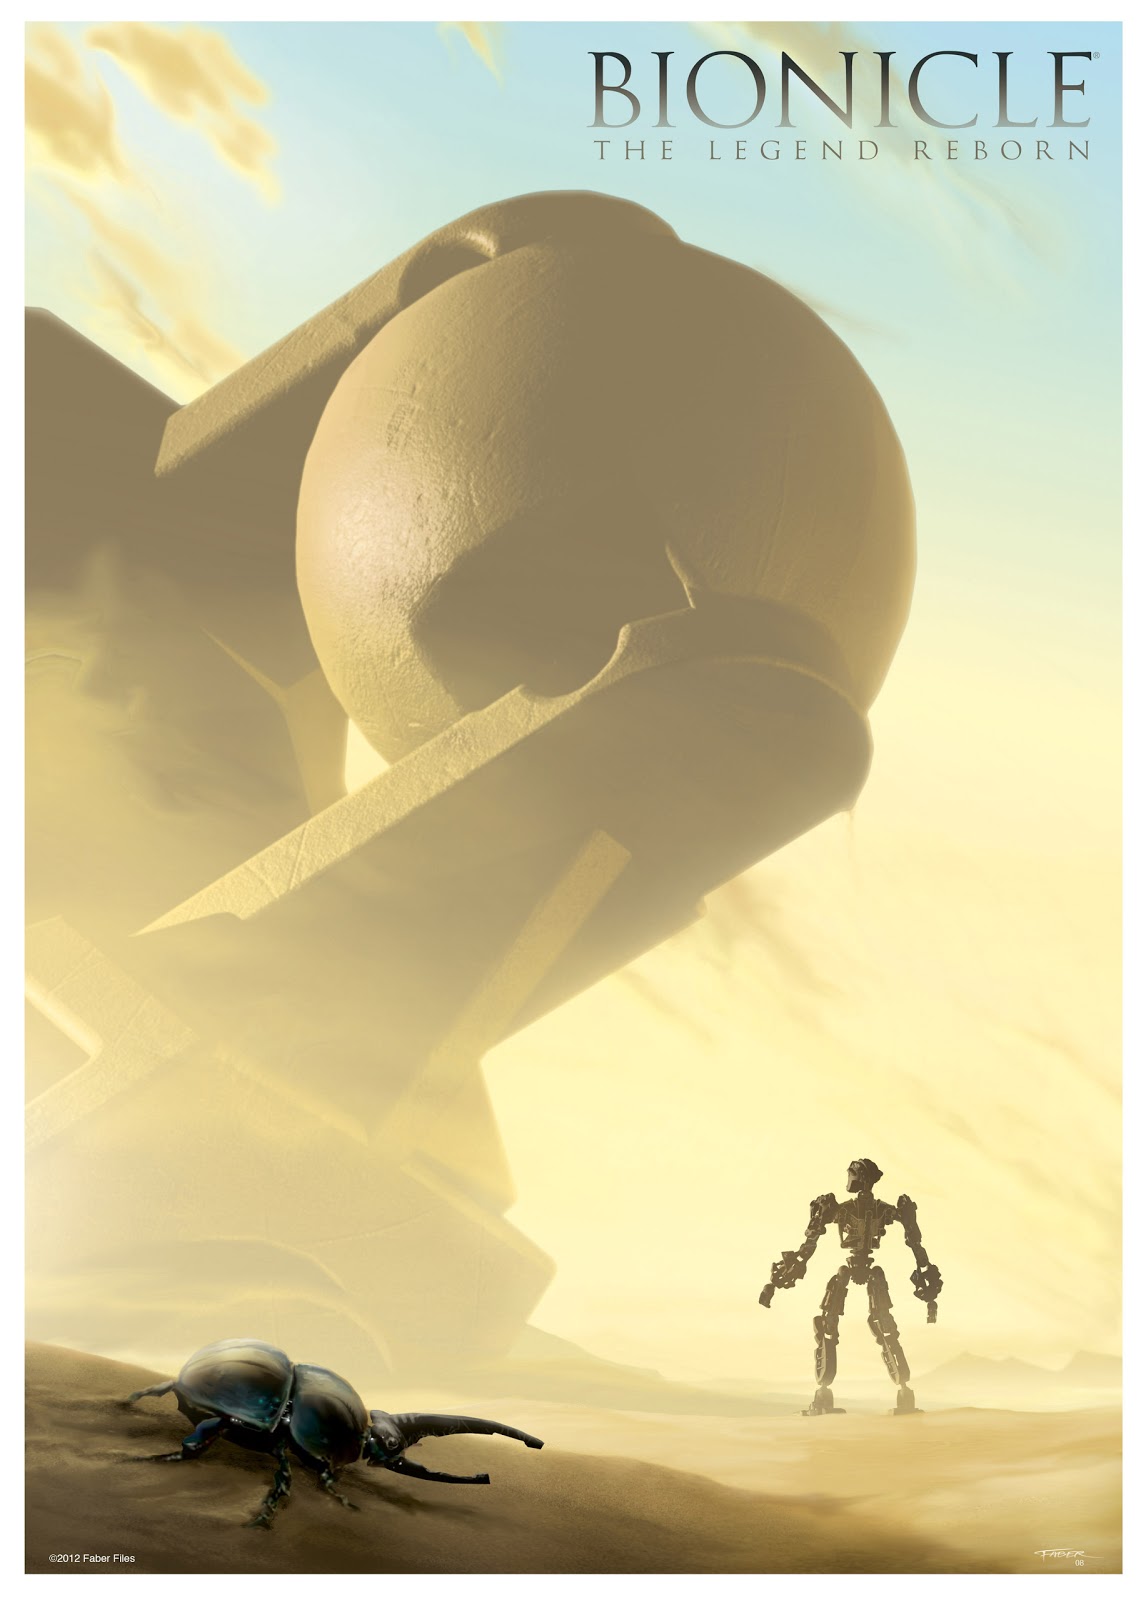 Bionicle Concept Arts - Página 4 Christian+Faber+Files_2009+teaser+poster